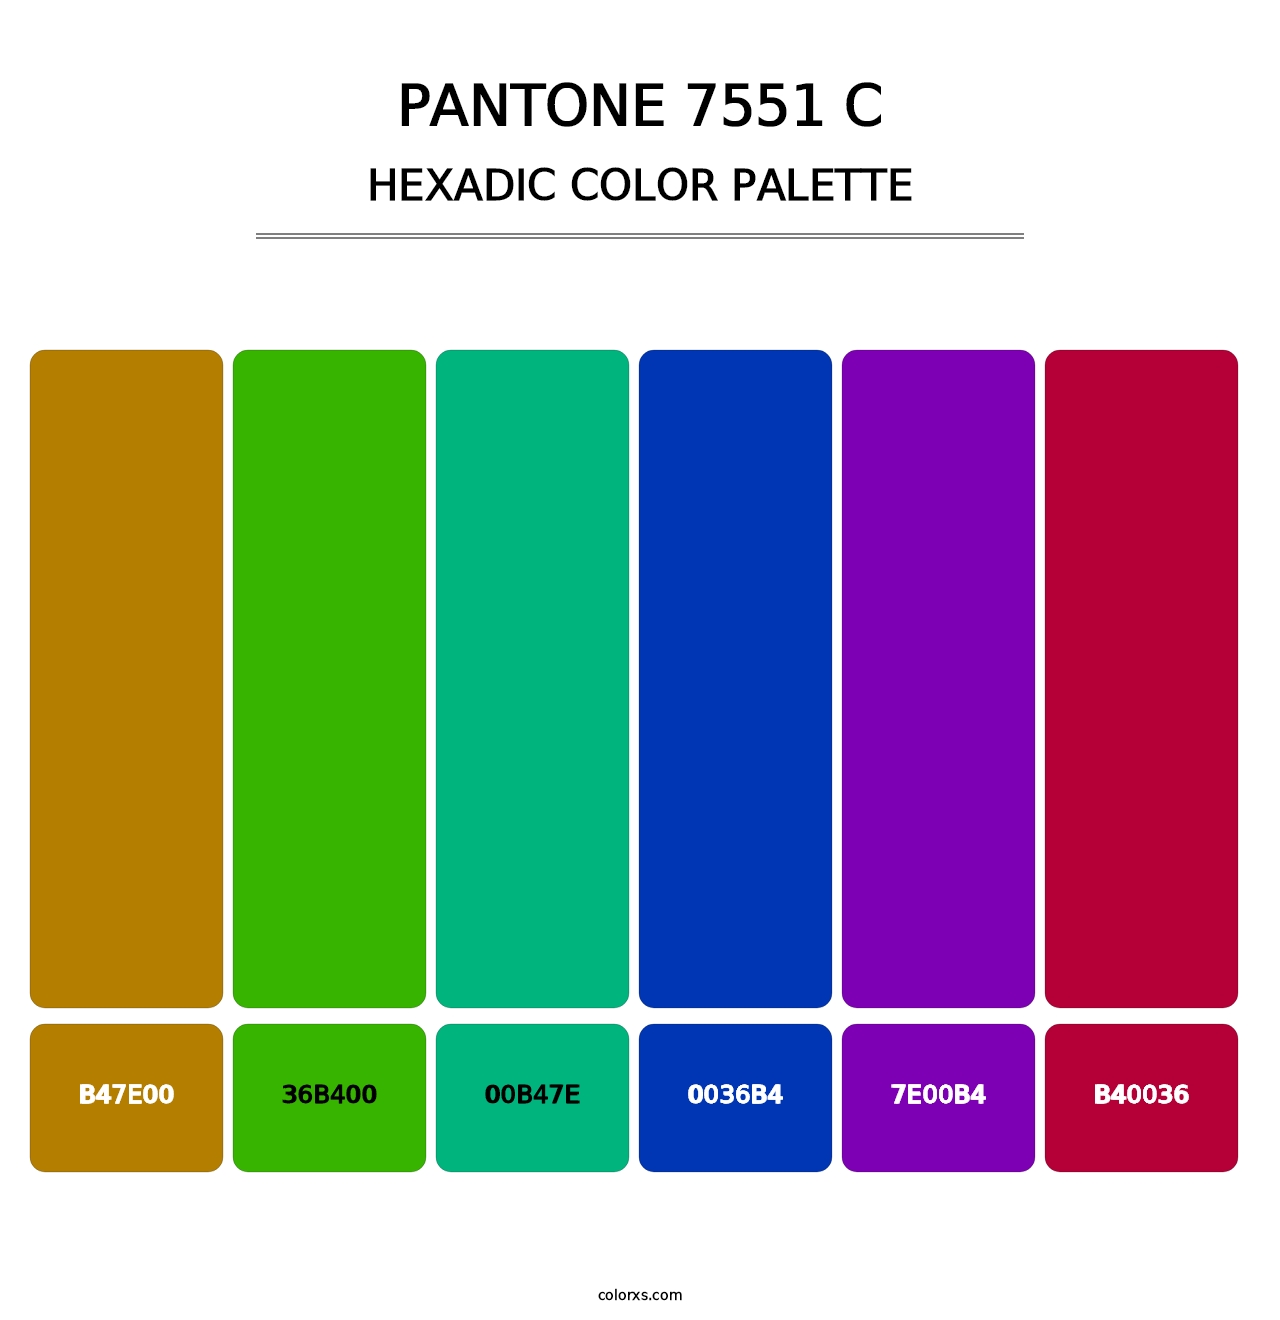 PANTONE 7551 C - Hexadic Color Palette